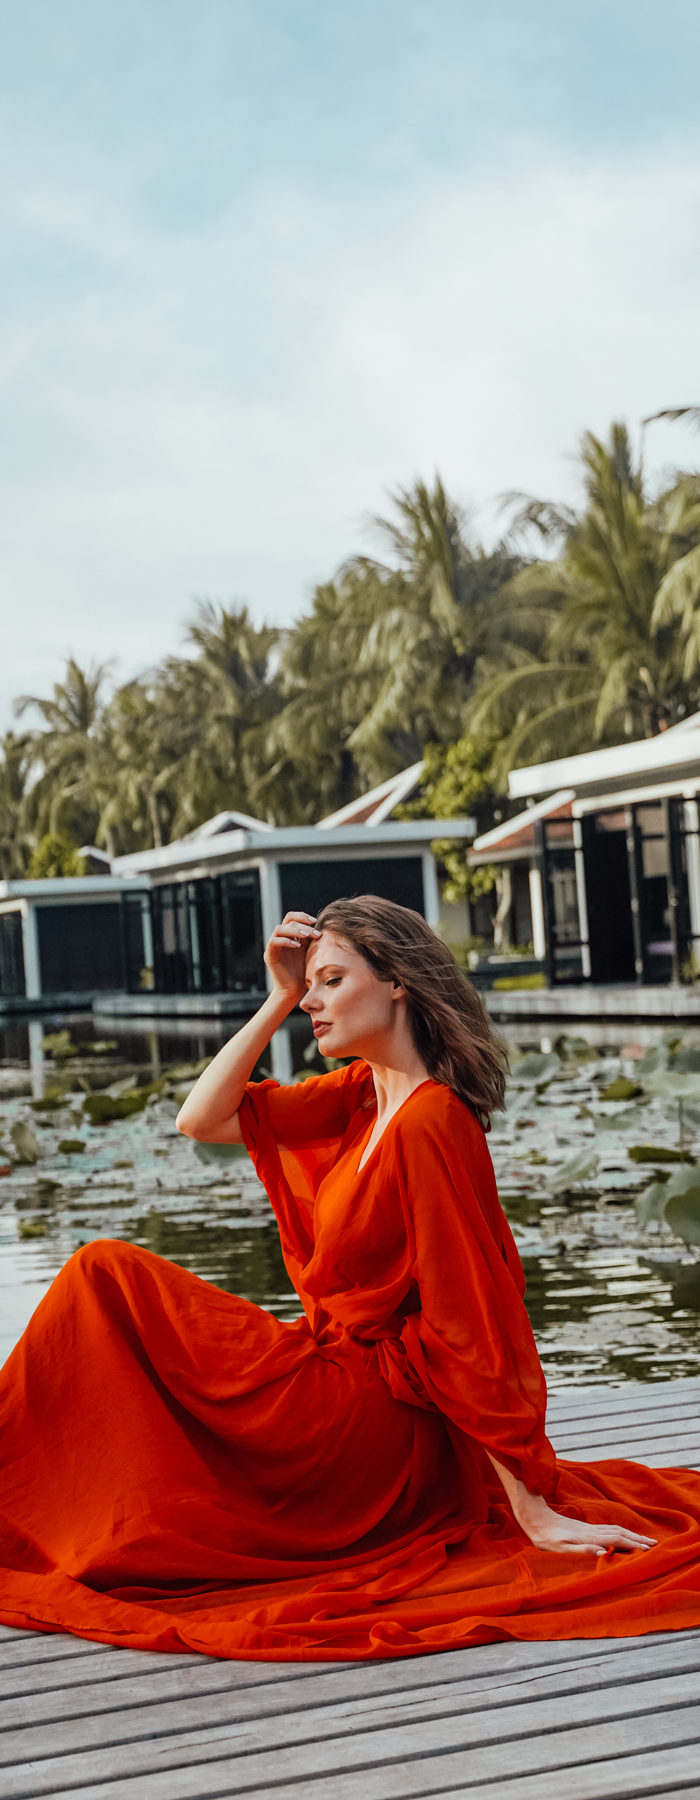 Alyssa Campanella of The A List blog shares her Hoi An, Vietnam travel guide